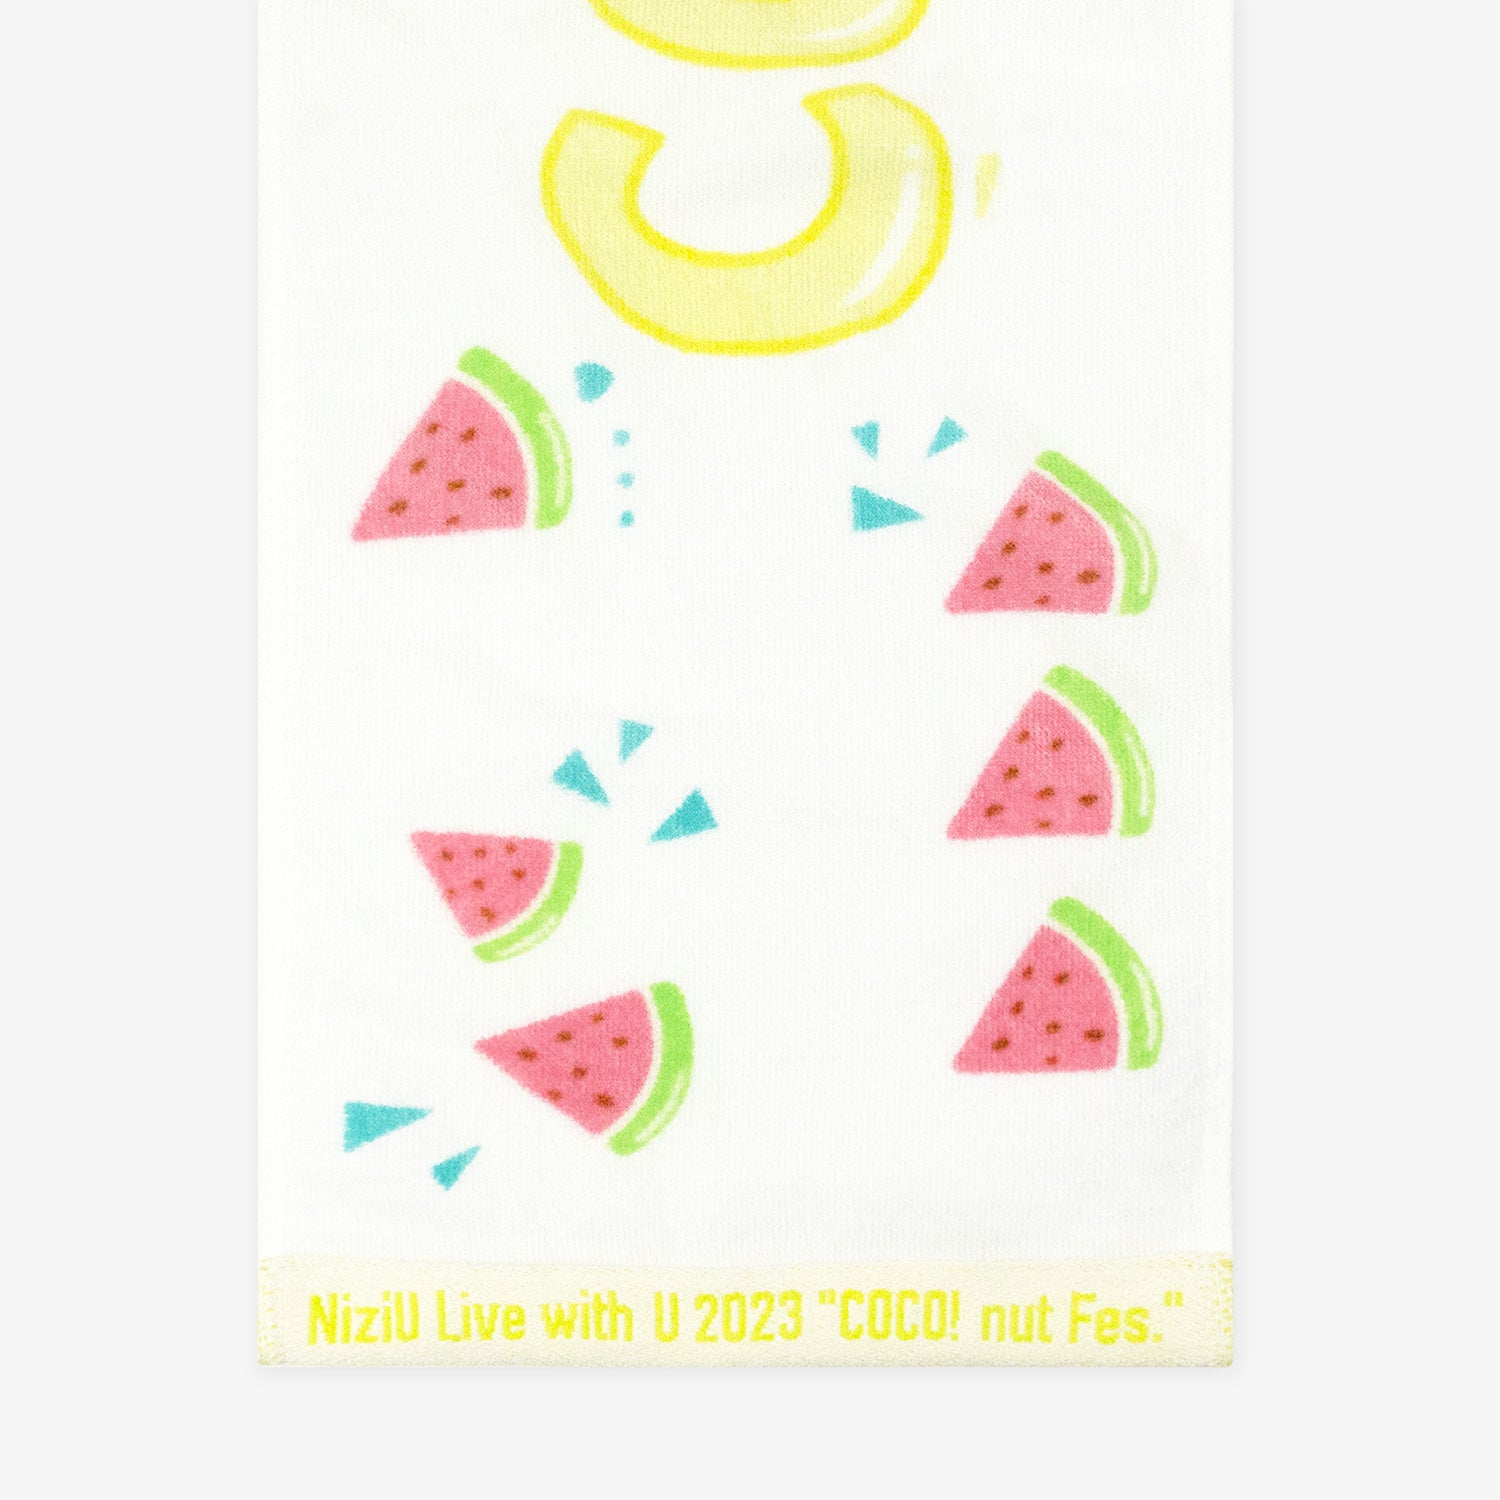 MUFFLER TOWEL Designed by NiziU【HIROSHIMA】 / NiziU『COCO! nut Fes.』